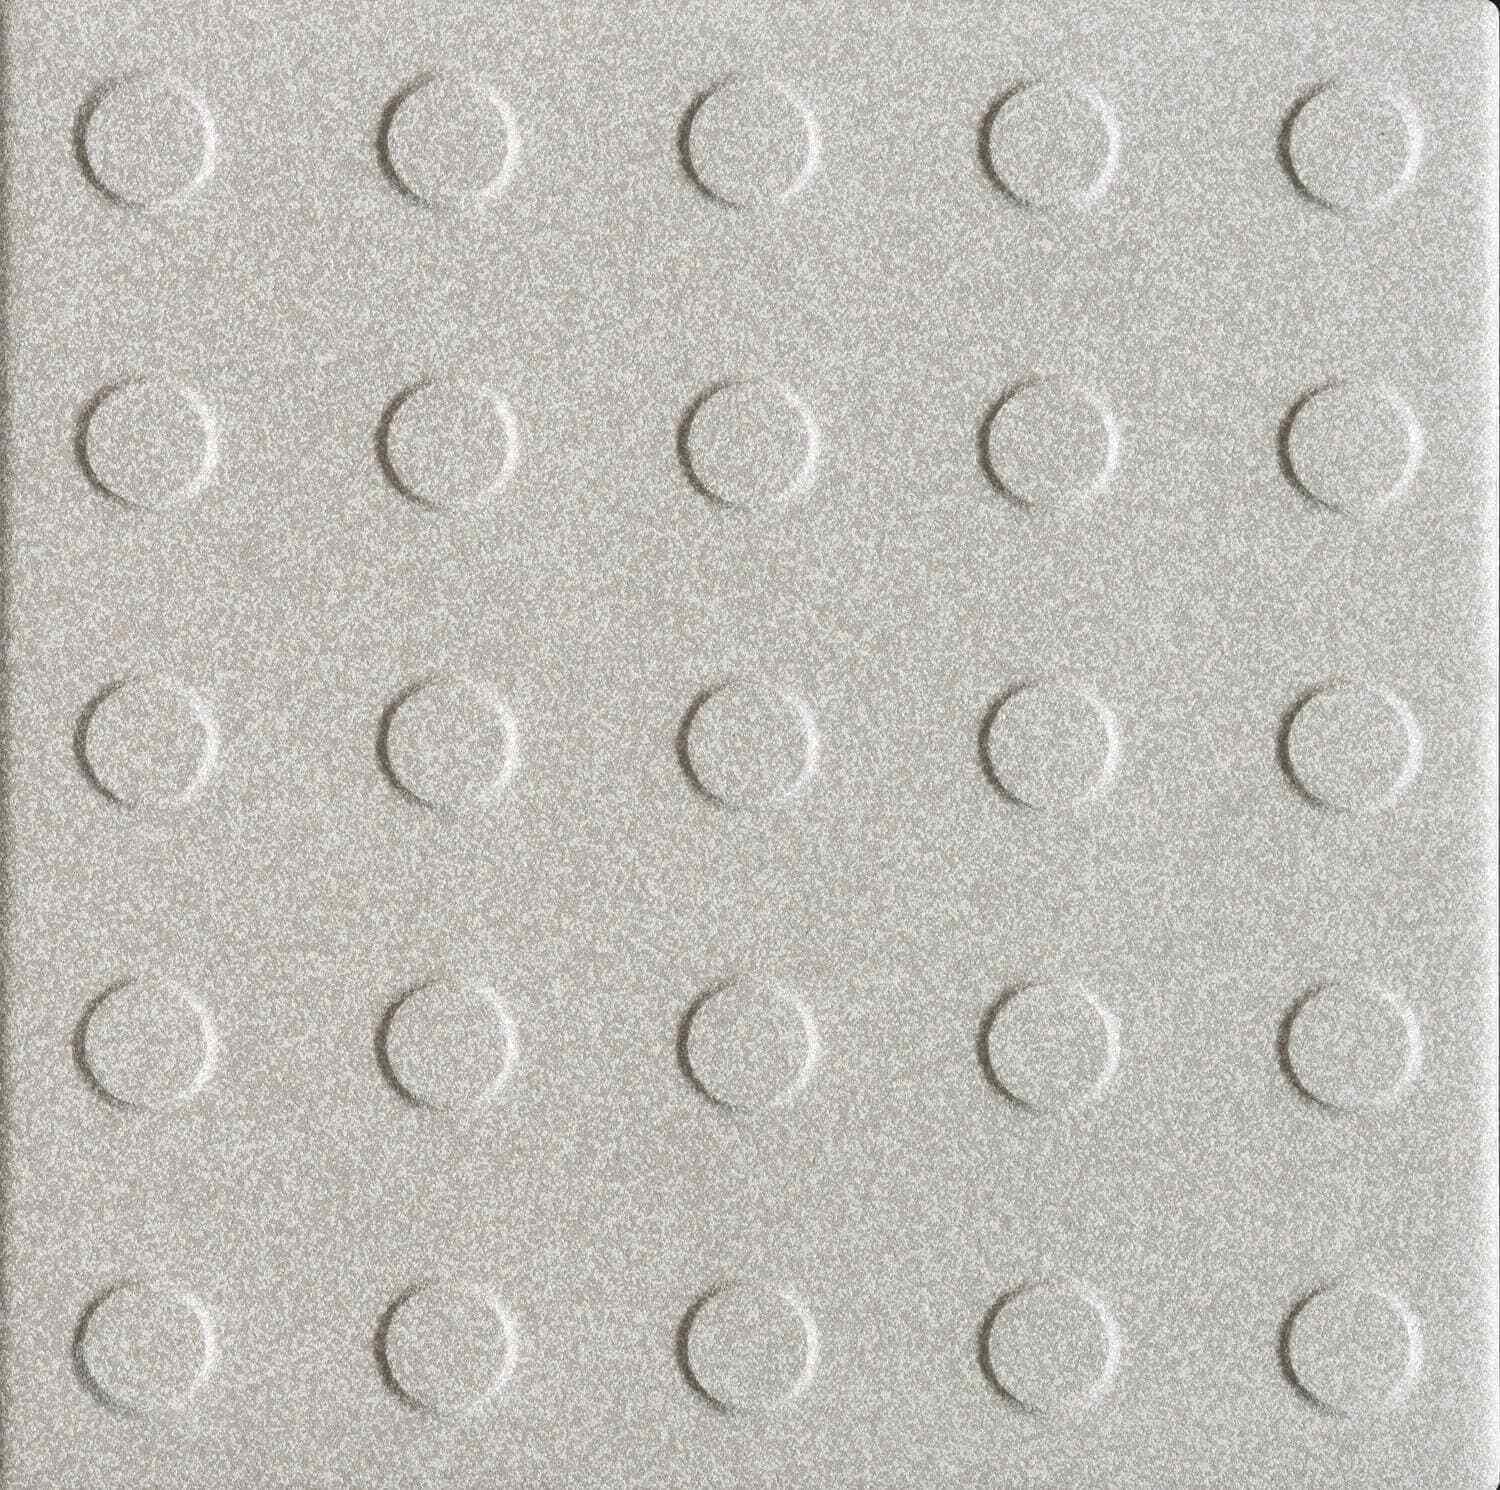 Dorset Woolliscroft Multidisc Steel Grey Slip Resistant Quarry Tile 148x148mm